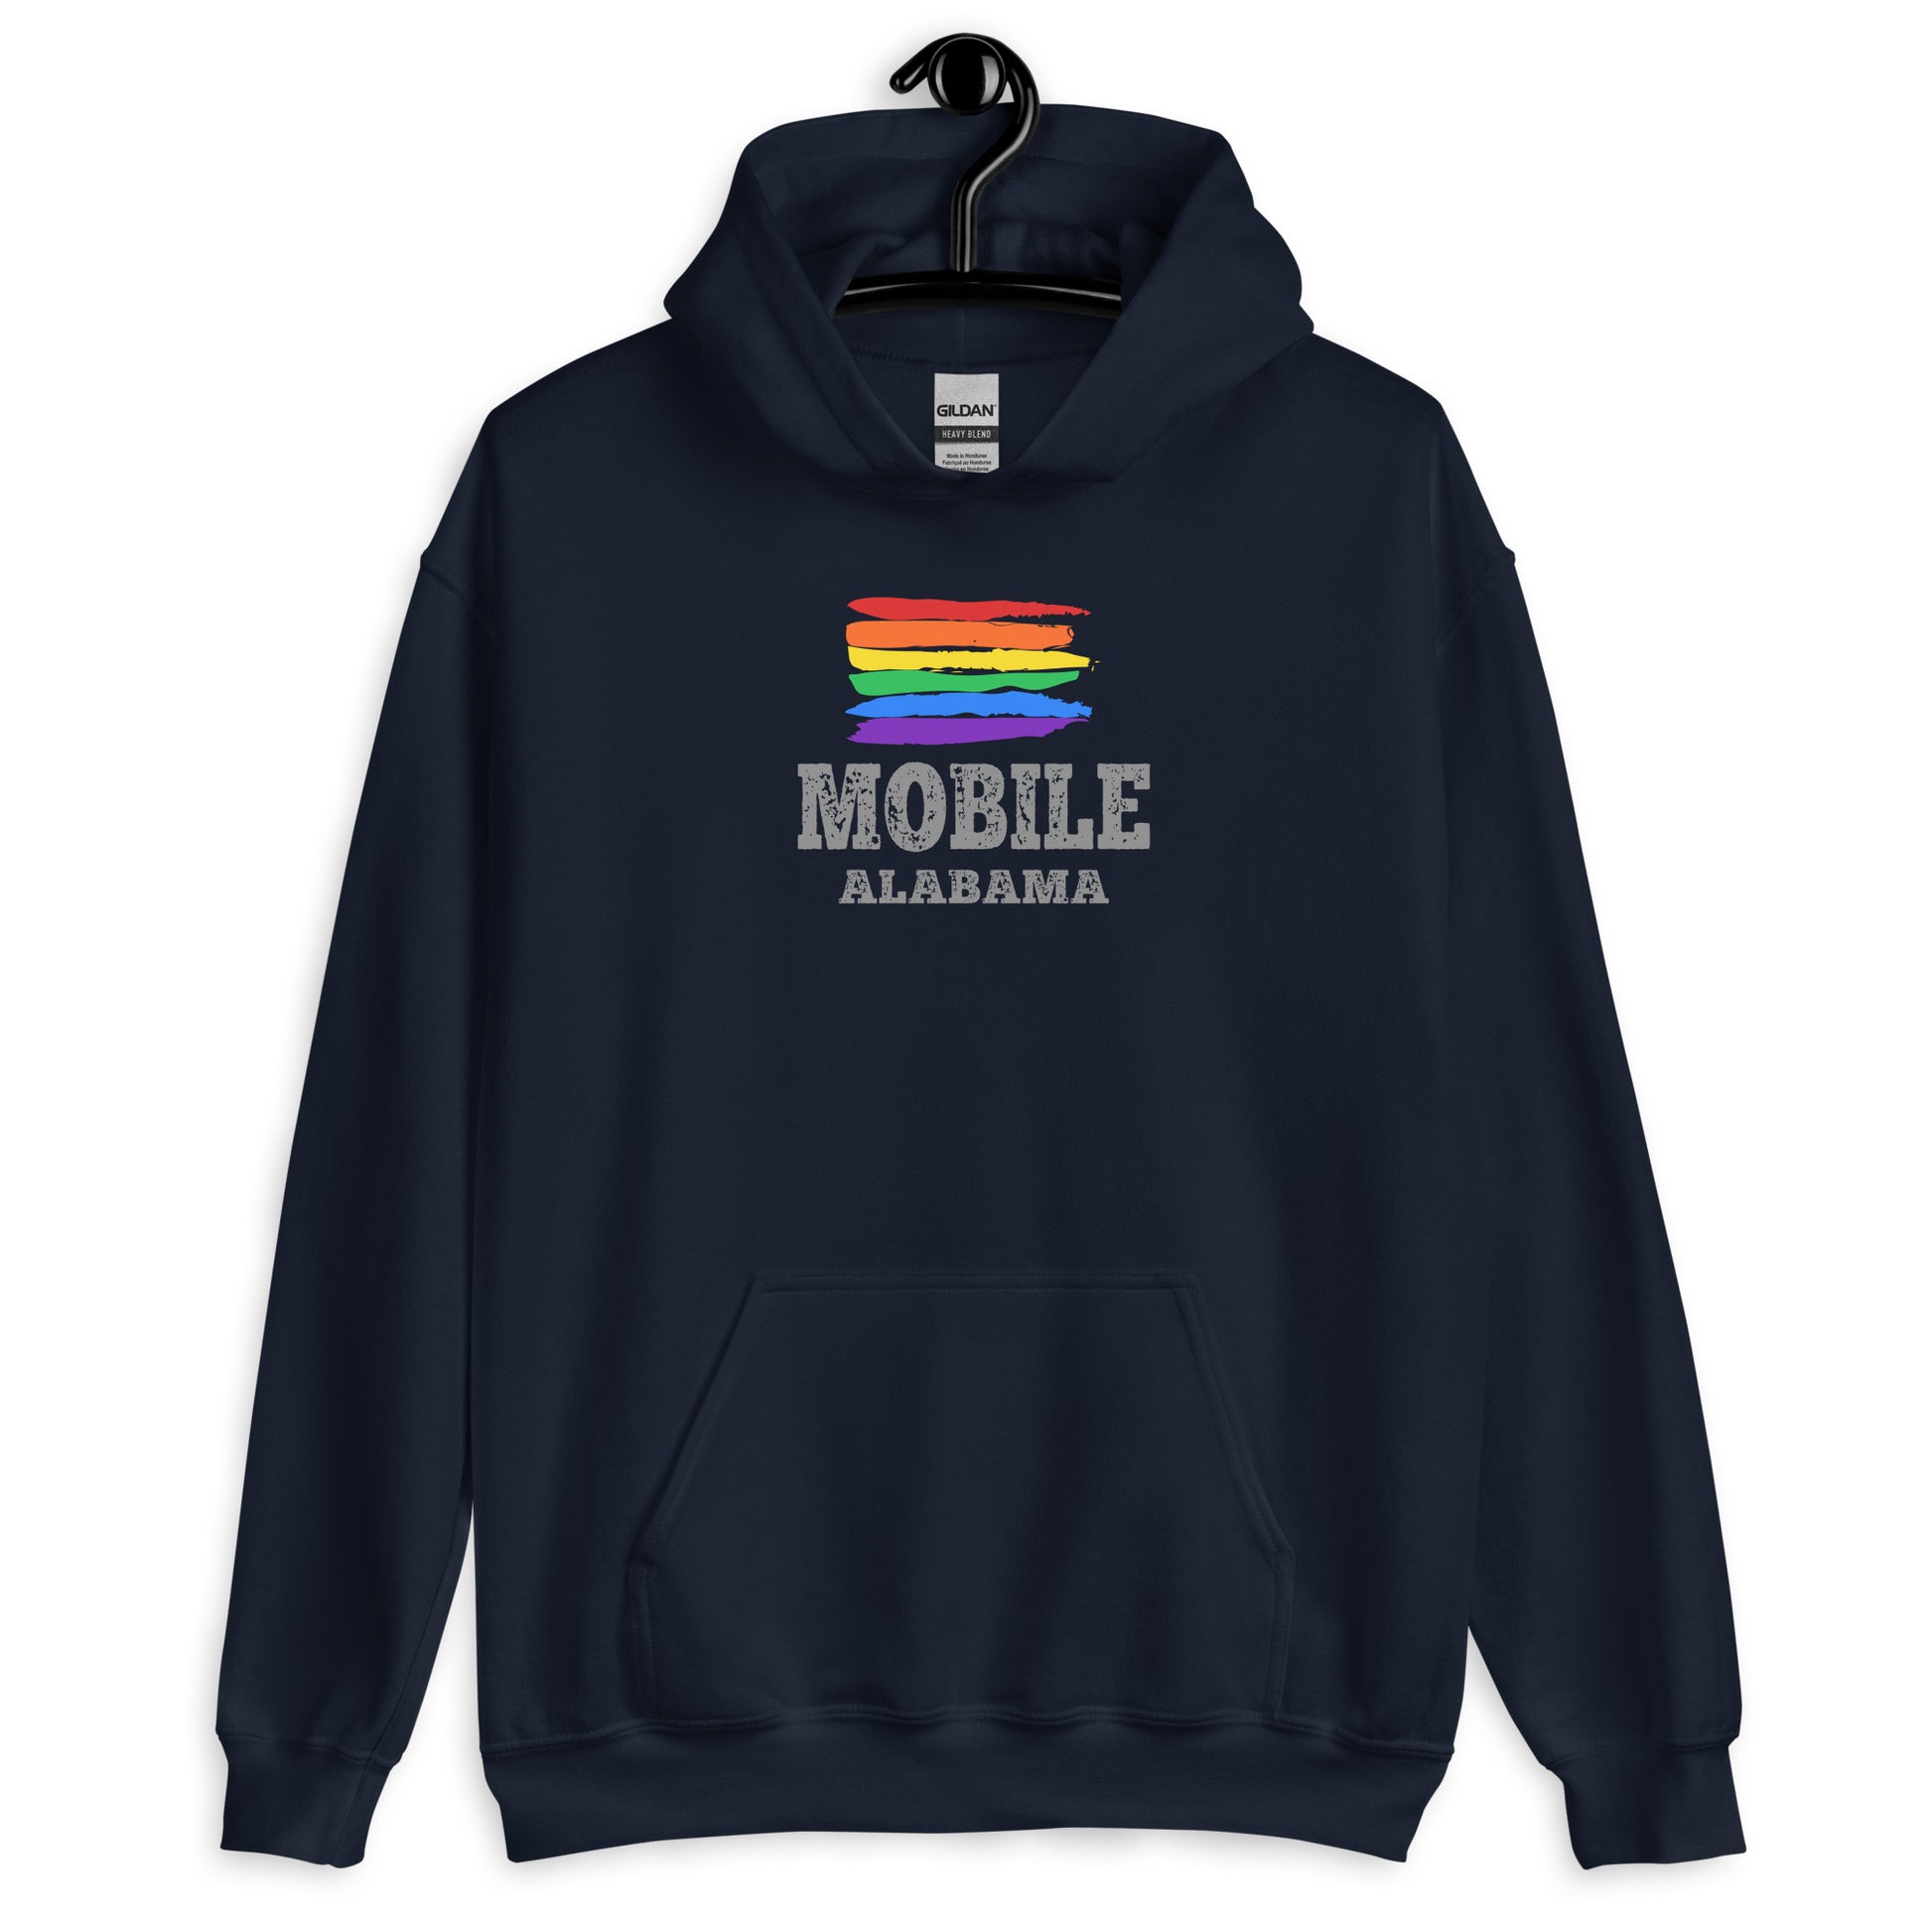 Mobile Alabama LGBTQ+ Gay Pride Hoodie - gay pride apparel